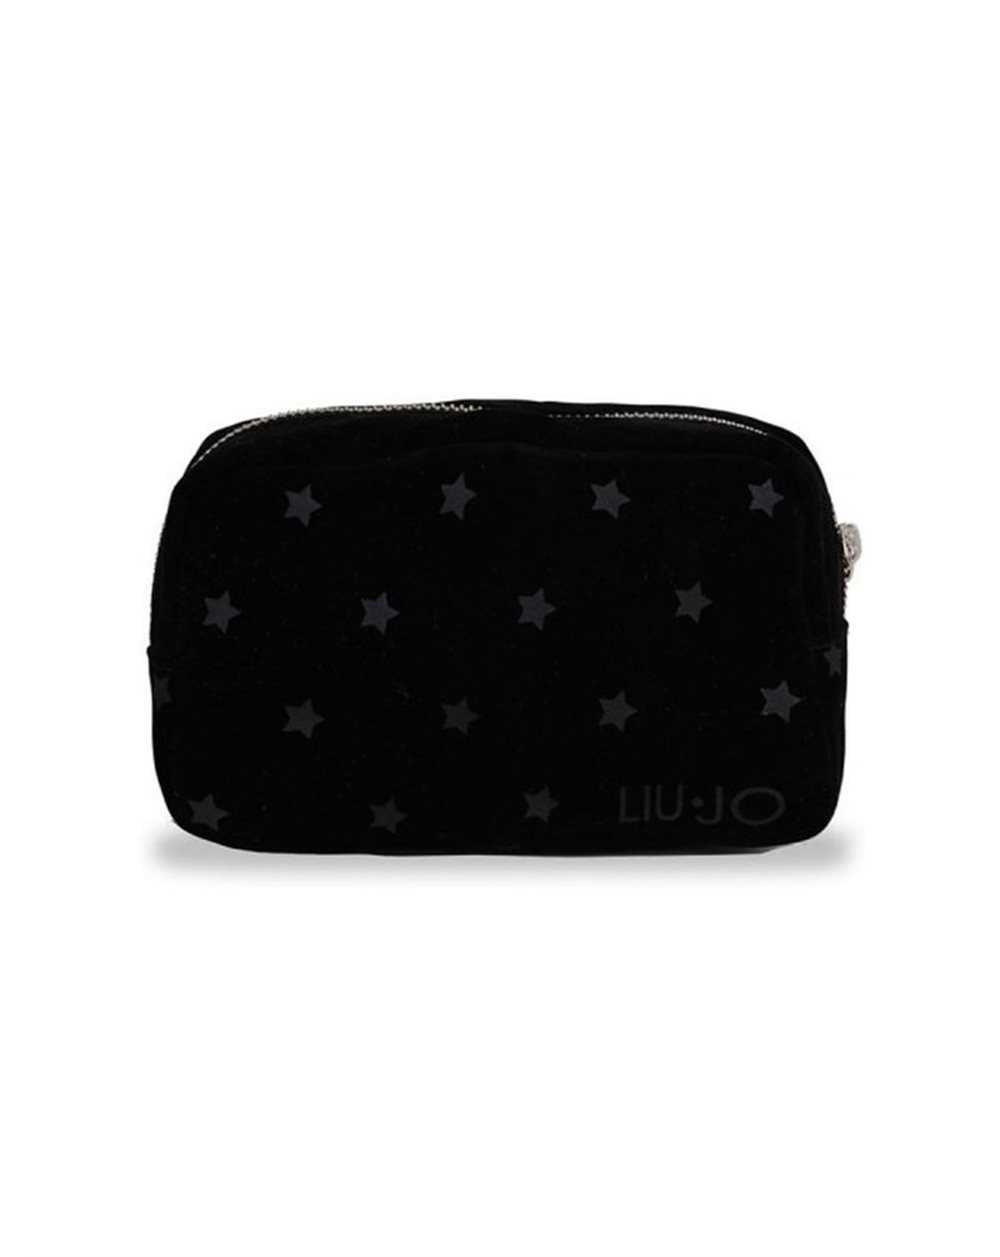 LIU-JO beauty pochette Stelline nera con chiusura zip